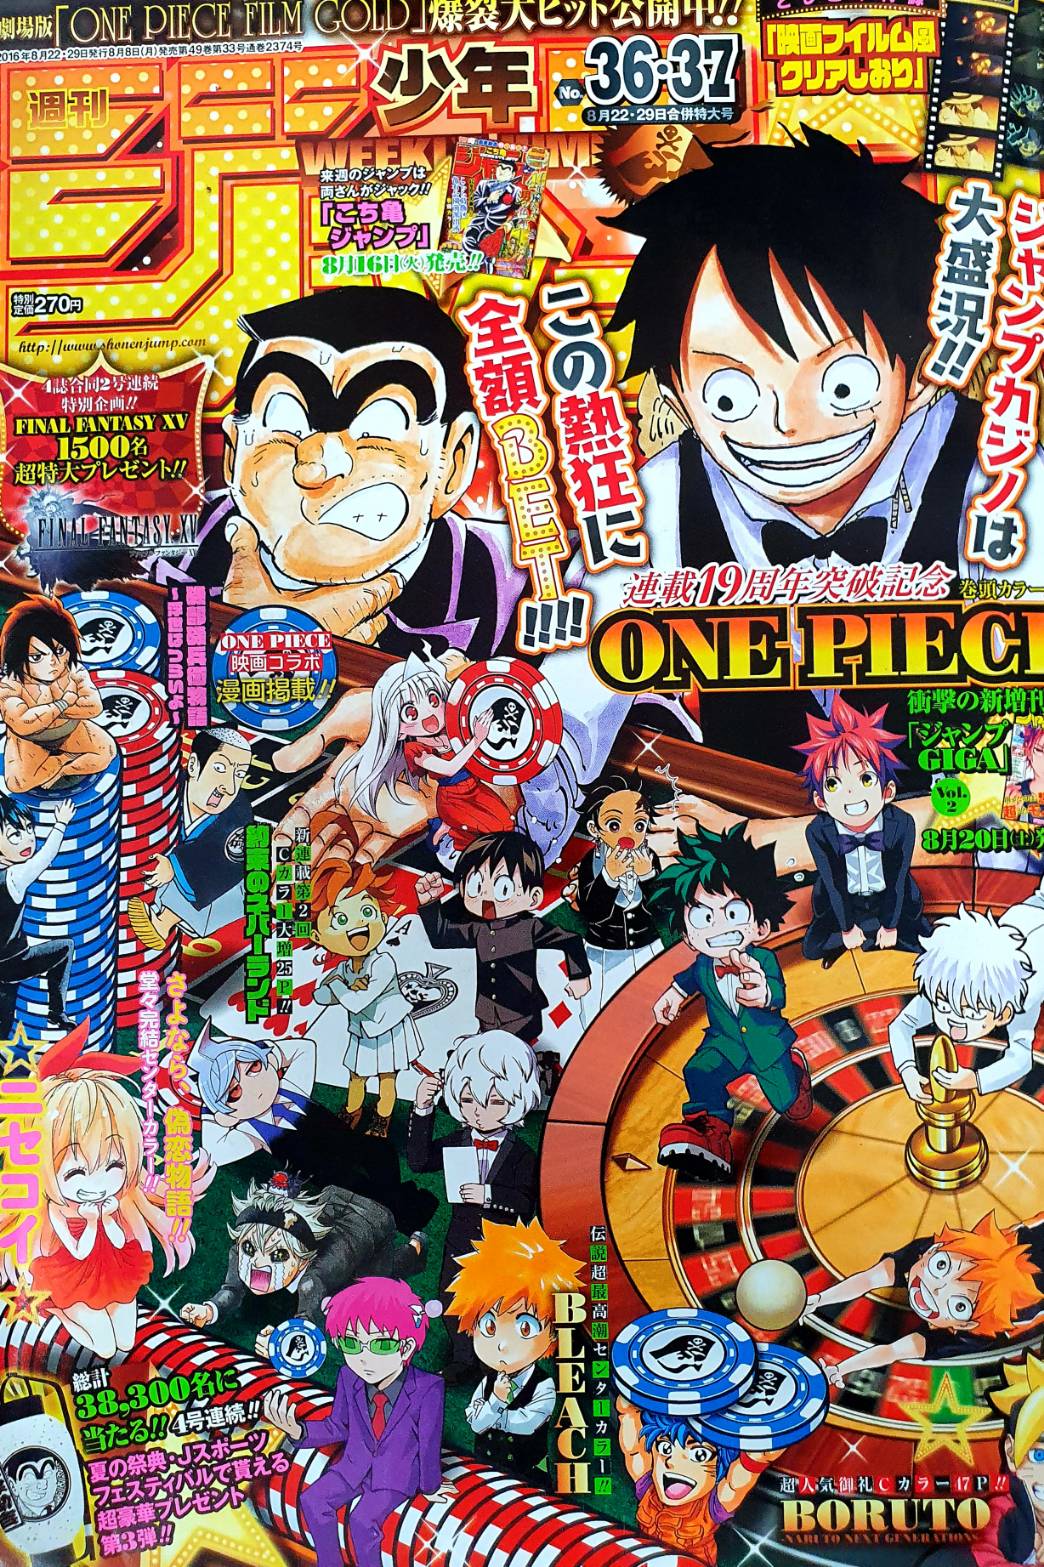 Book Weekly Shonen Jump 36 37 16 One Piece Movie Band One Piece Japan Deal World